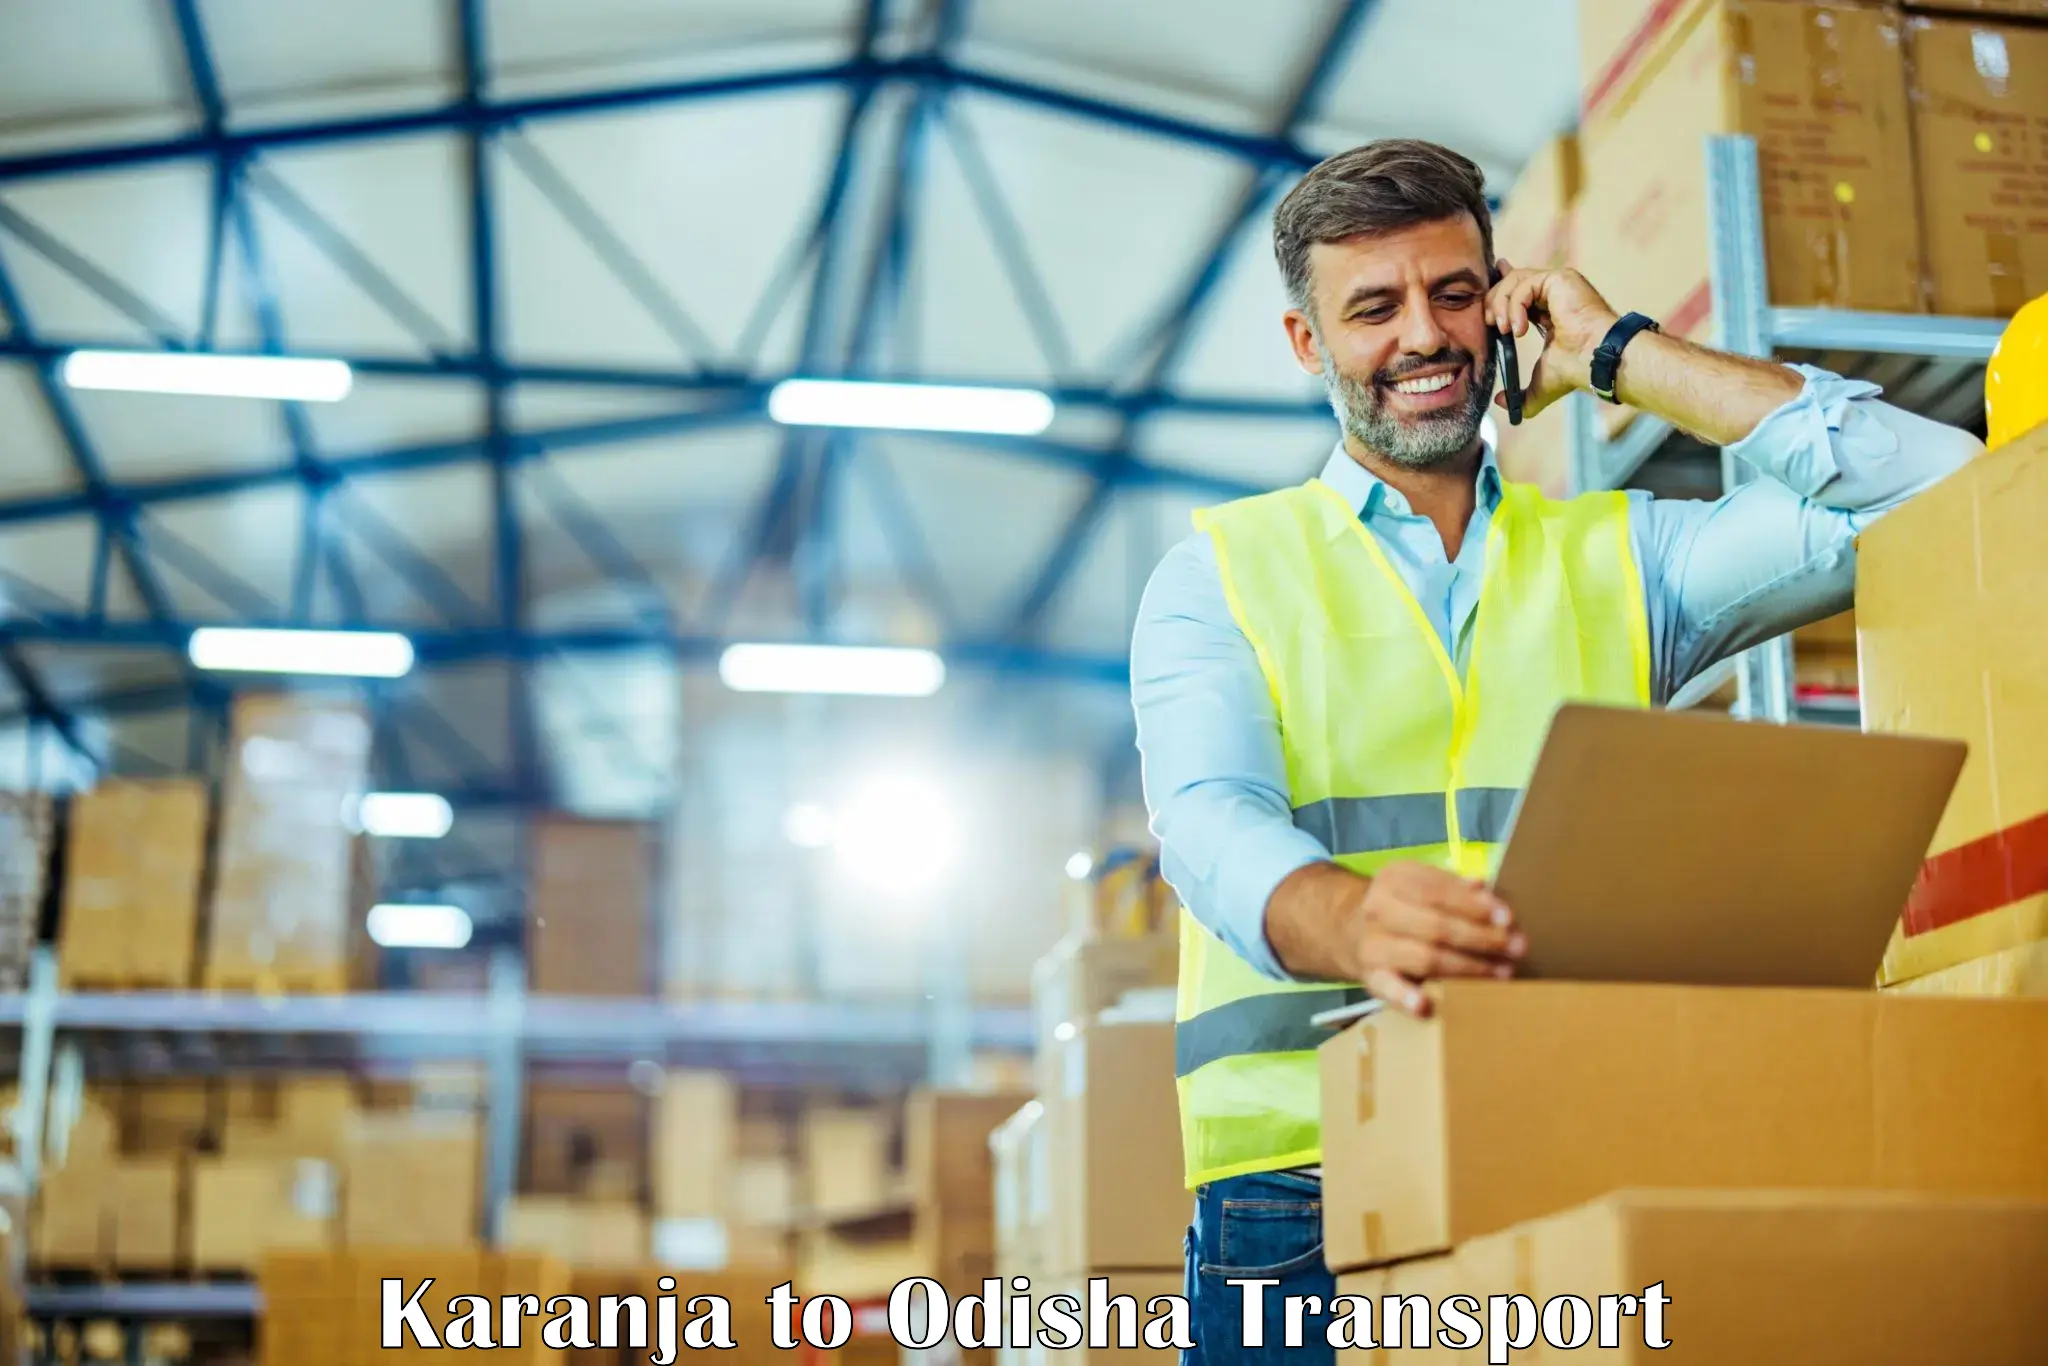 Truck transport companies in India Karanja to Loisingha